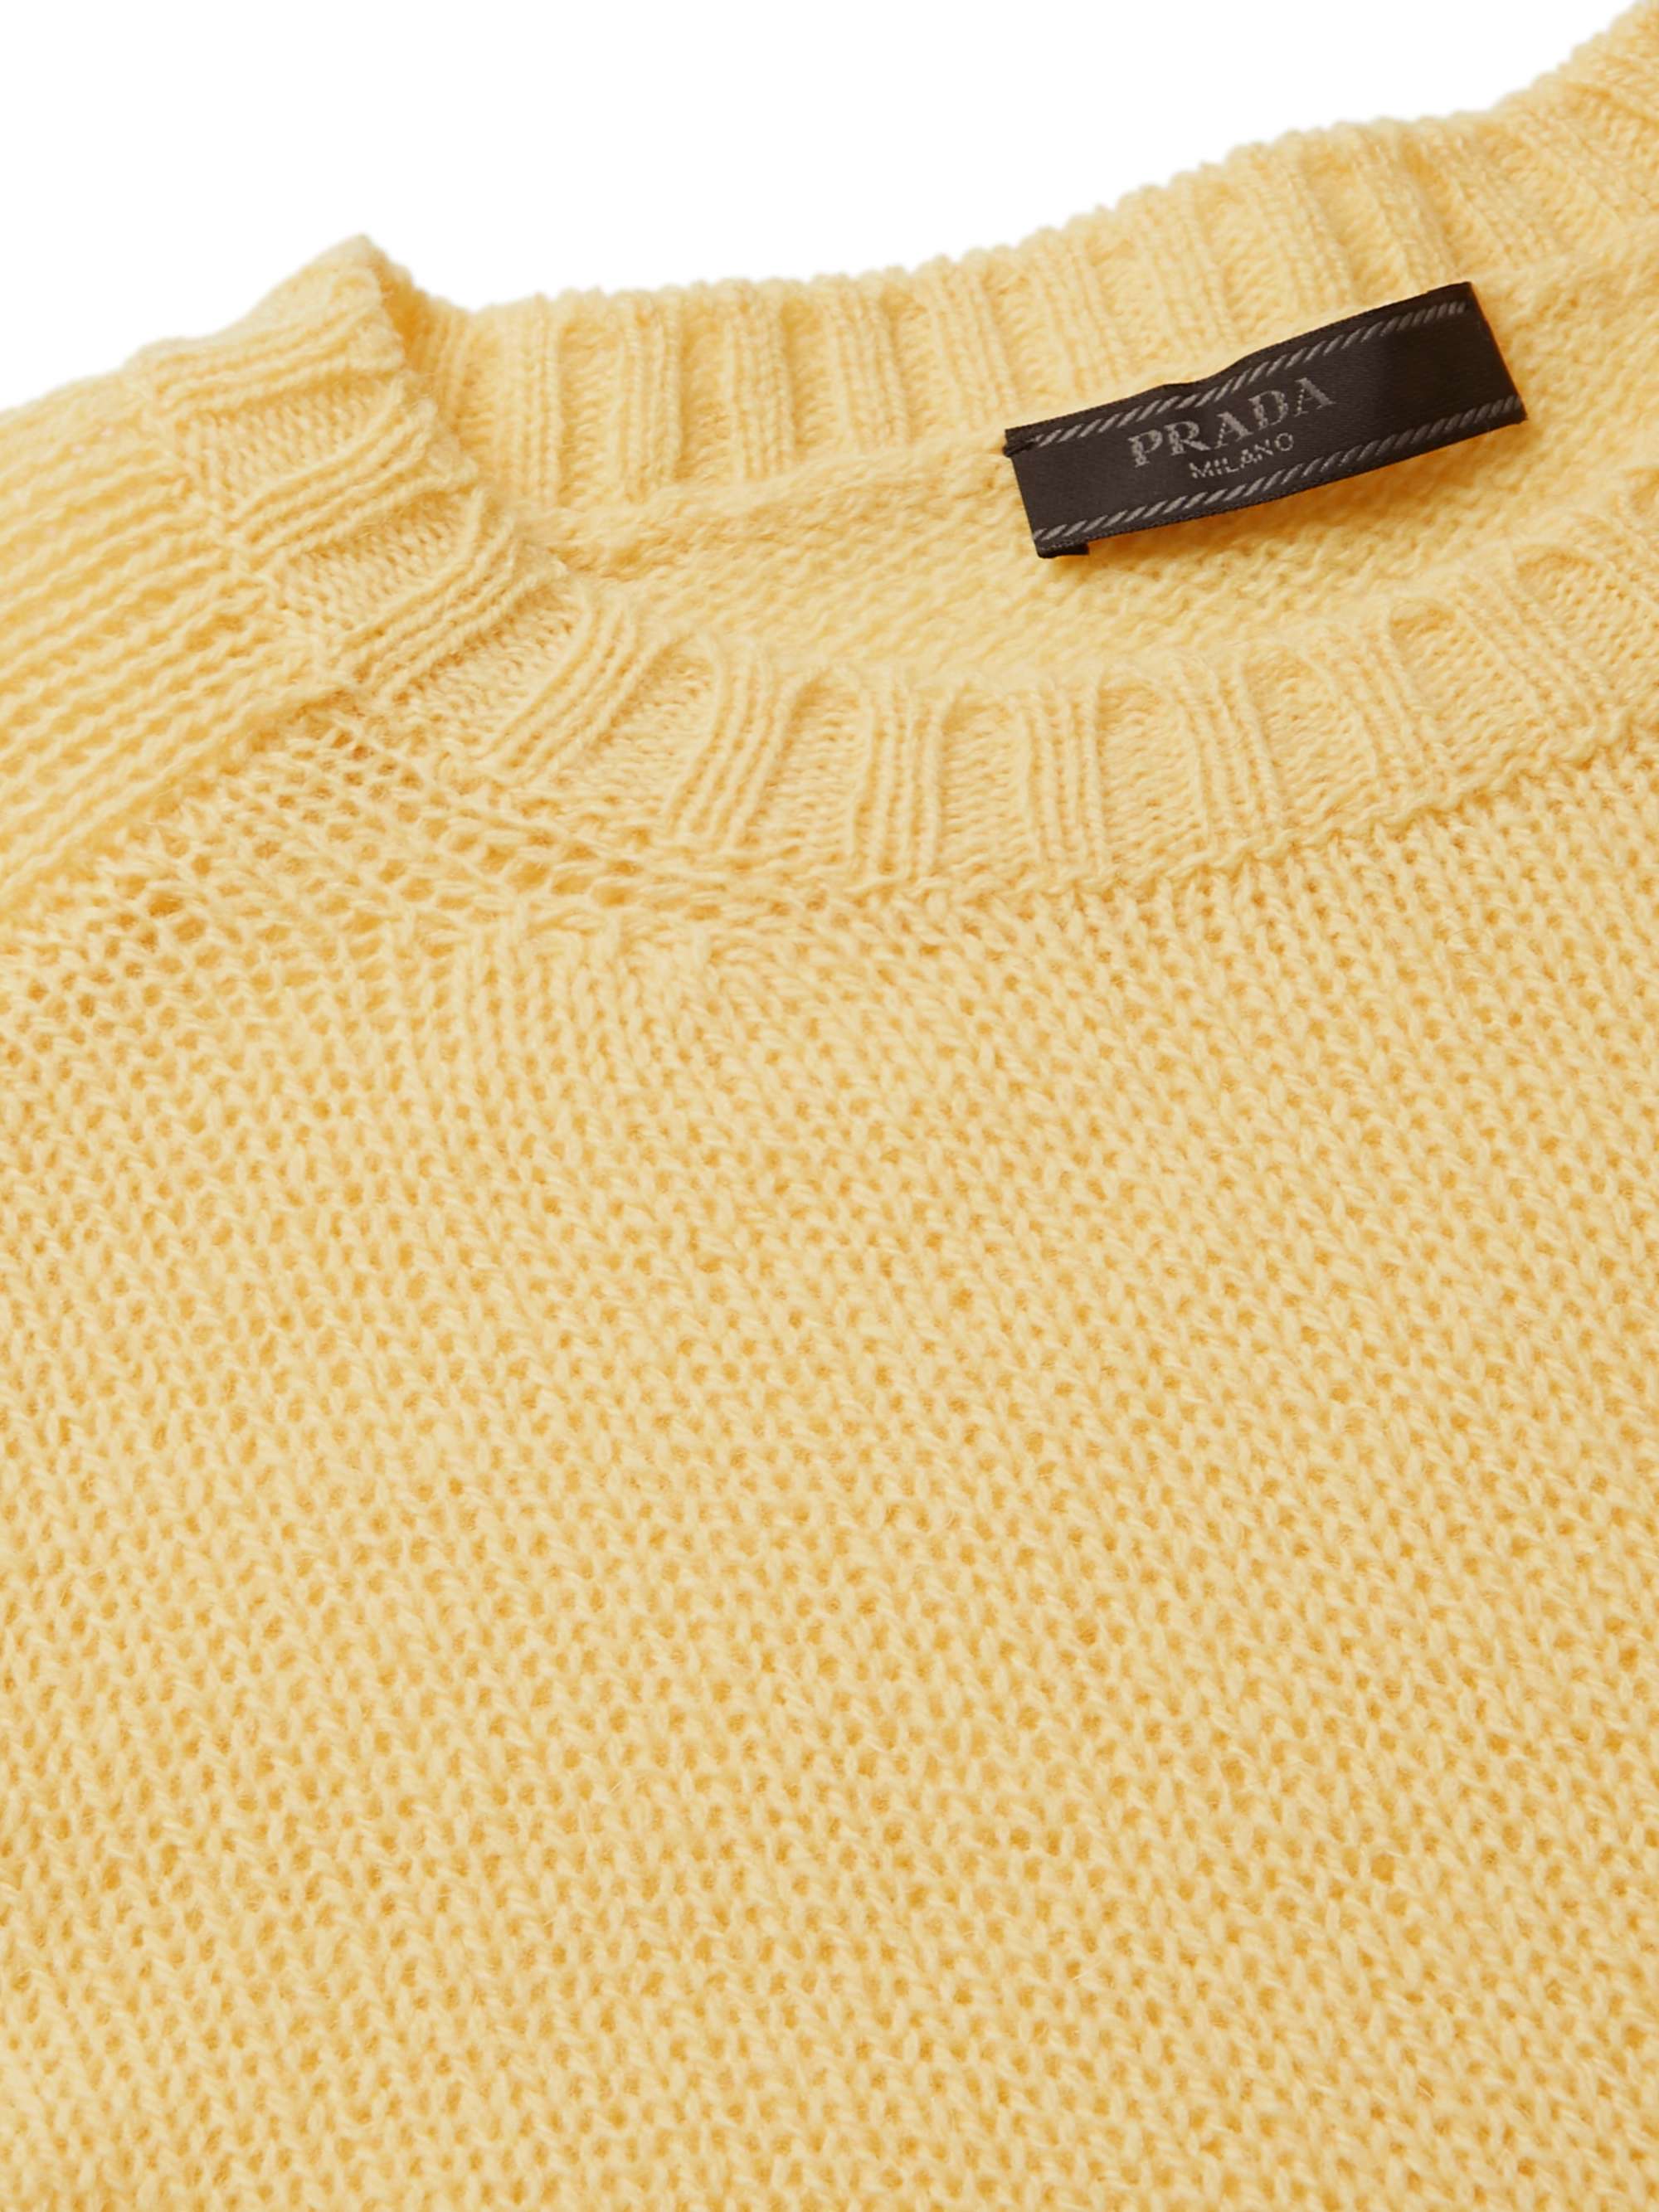 PRADA Shetland Virgin Wool Sweater